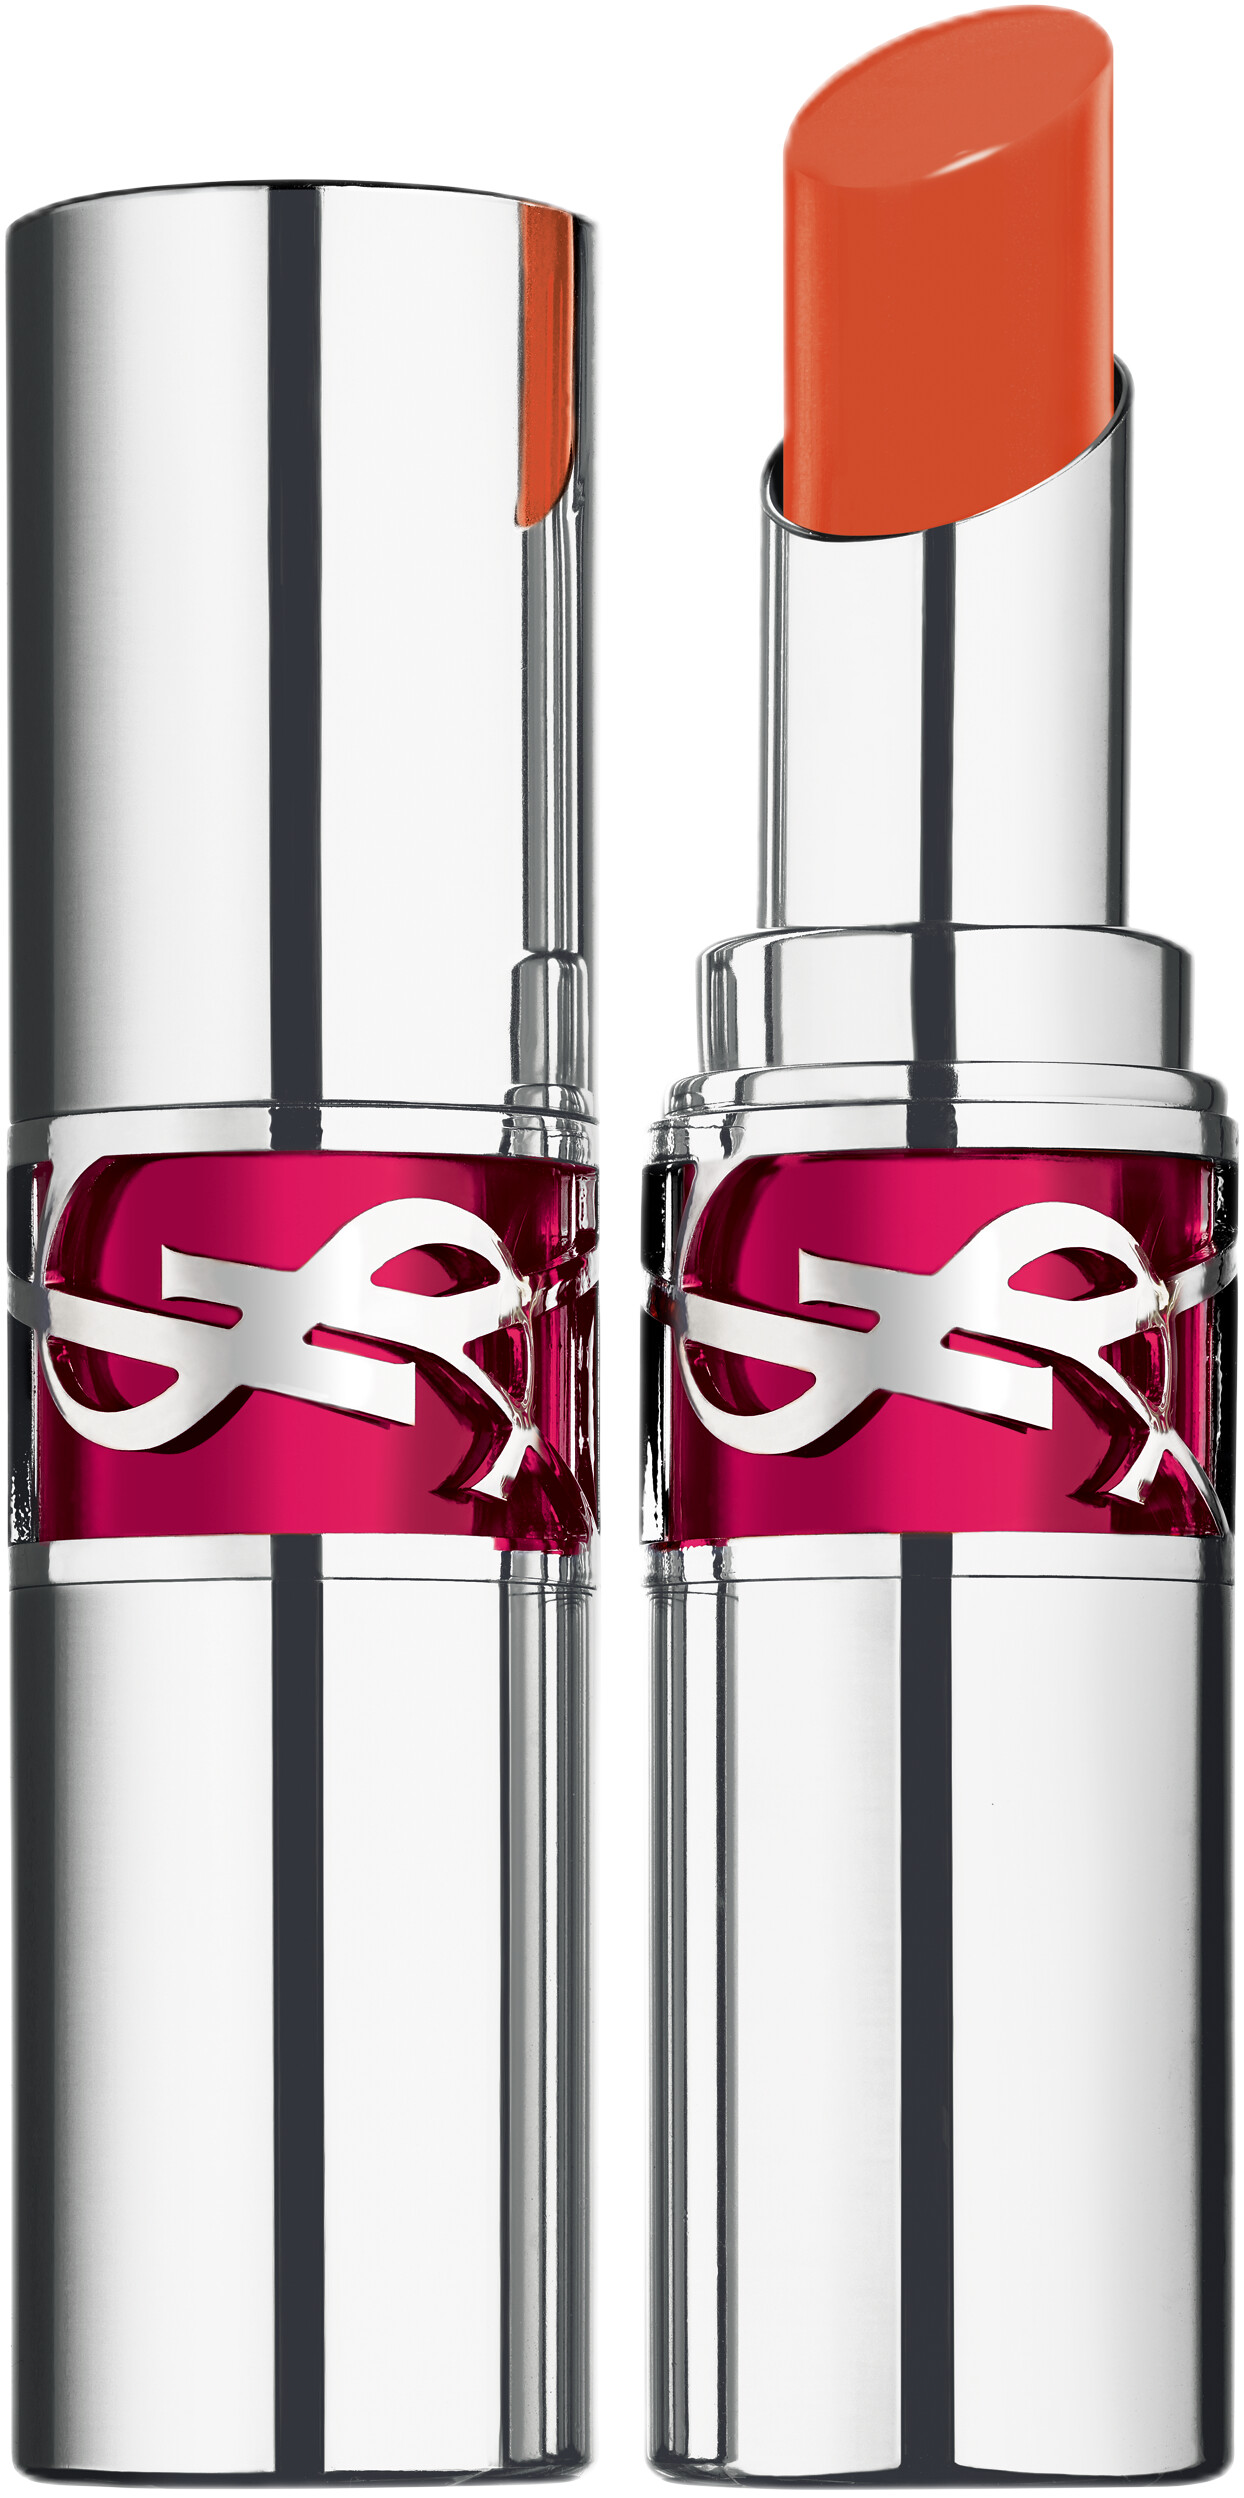 Yves Saint Laurent Rouge Volupte Candy Glaze Double Care Balm 3.2g 8 - Chili Delight